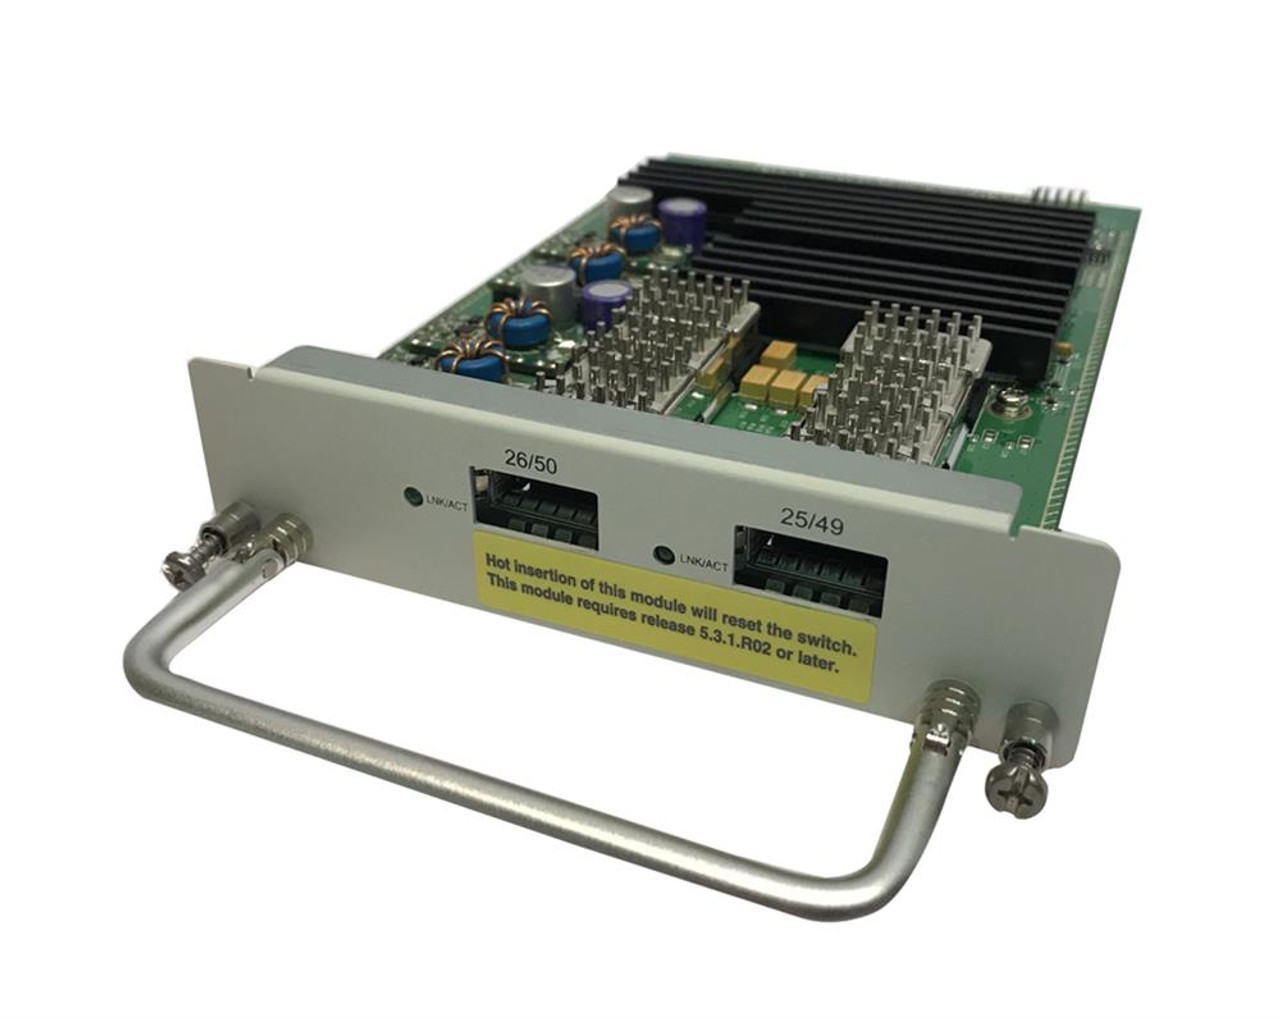 OS6800-XNI-U2 Alcatel-Lucent Os6800 2 Port 10 Gig Ethernet Expansion Module (Refurbished)